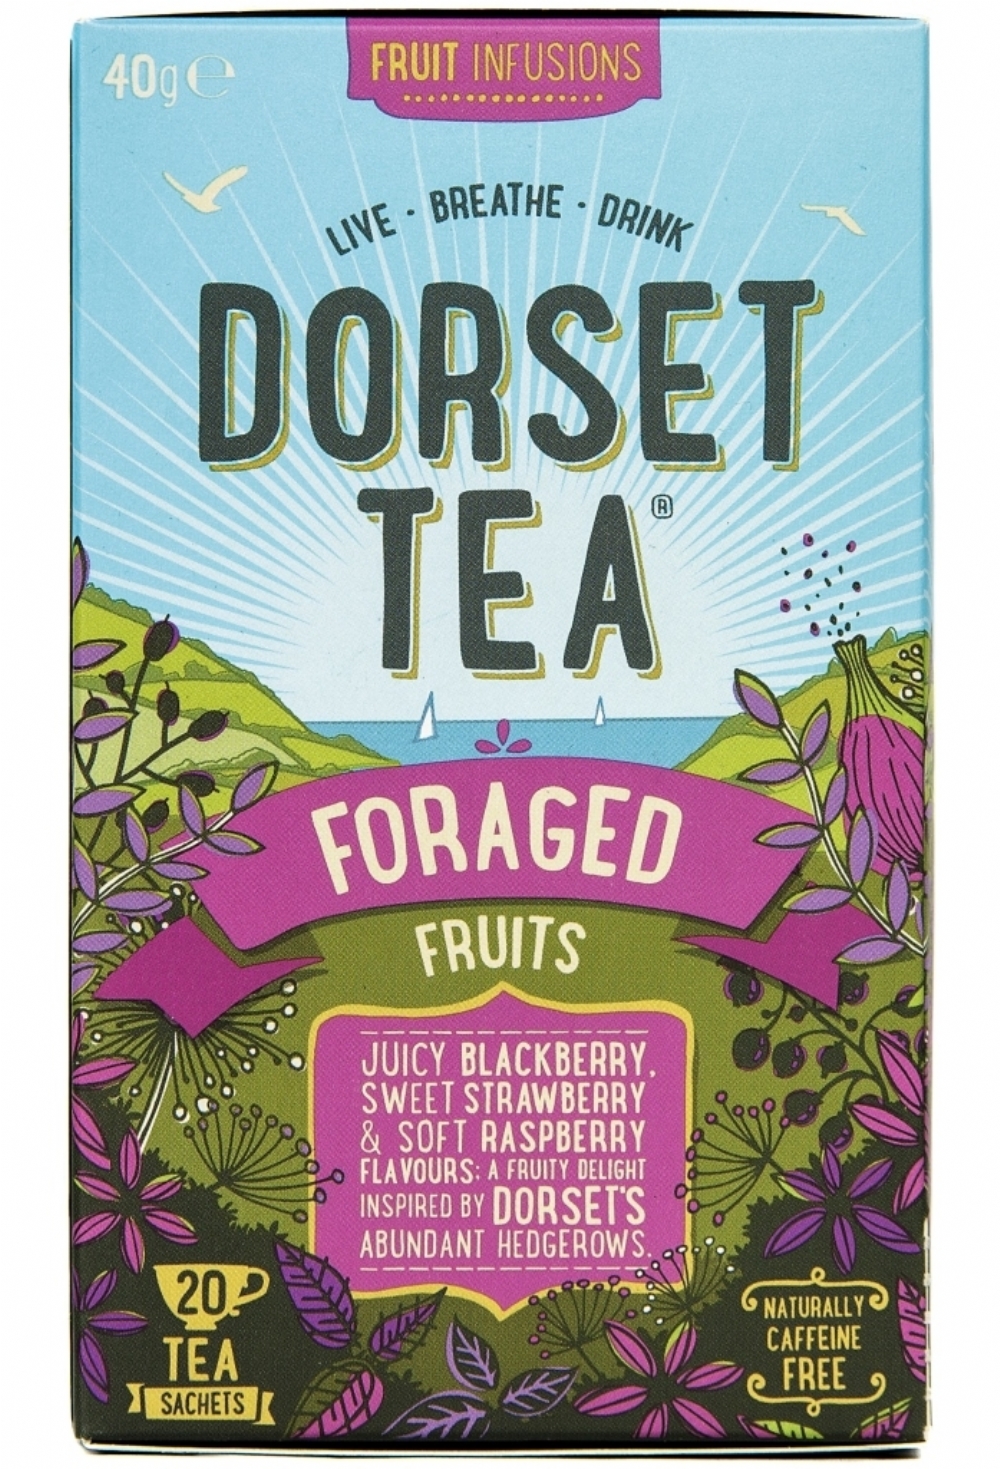 DORSET TEA Foraged Fruits - 20 Sachets